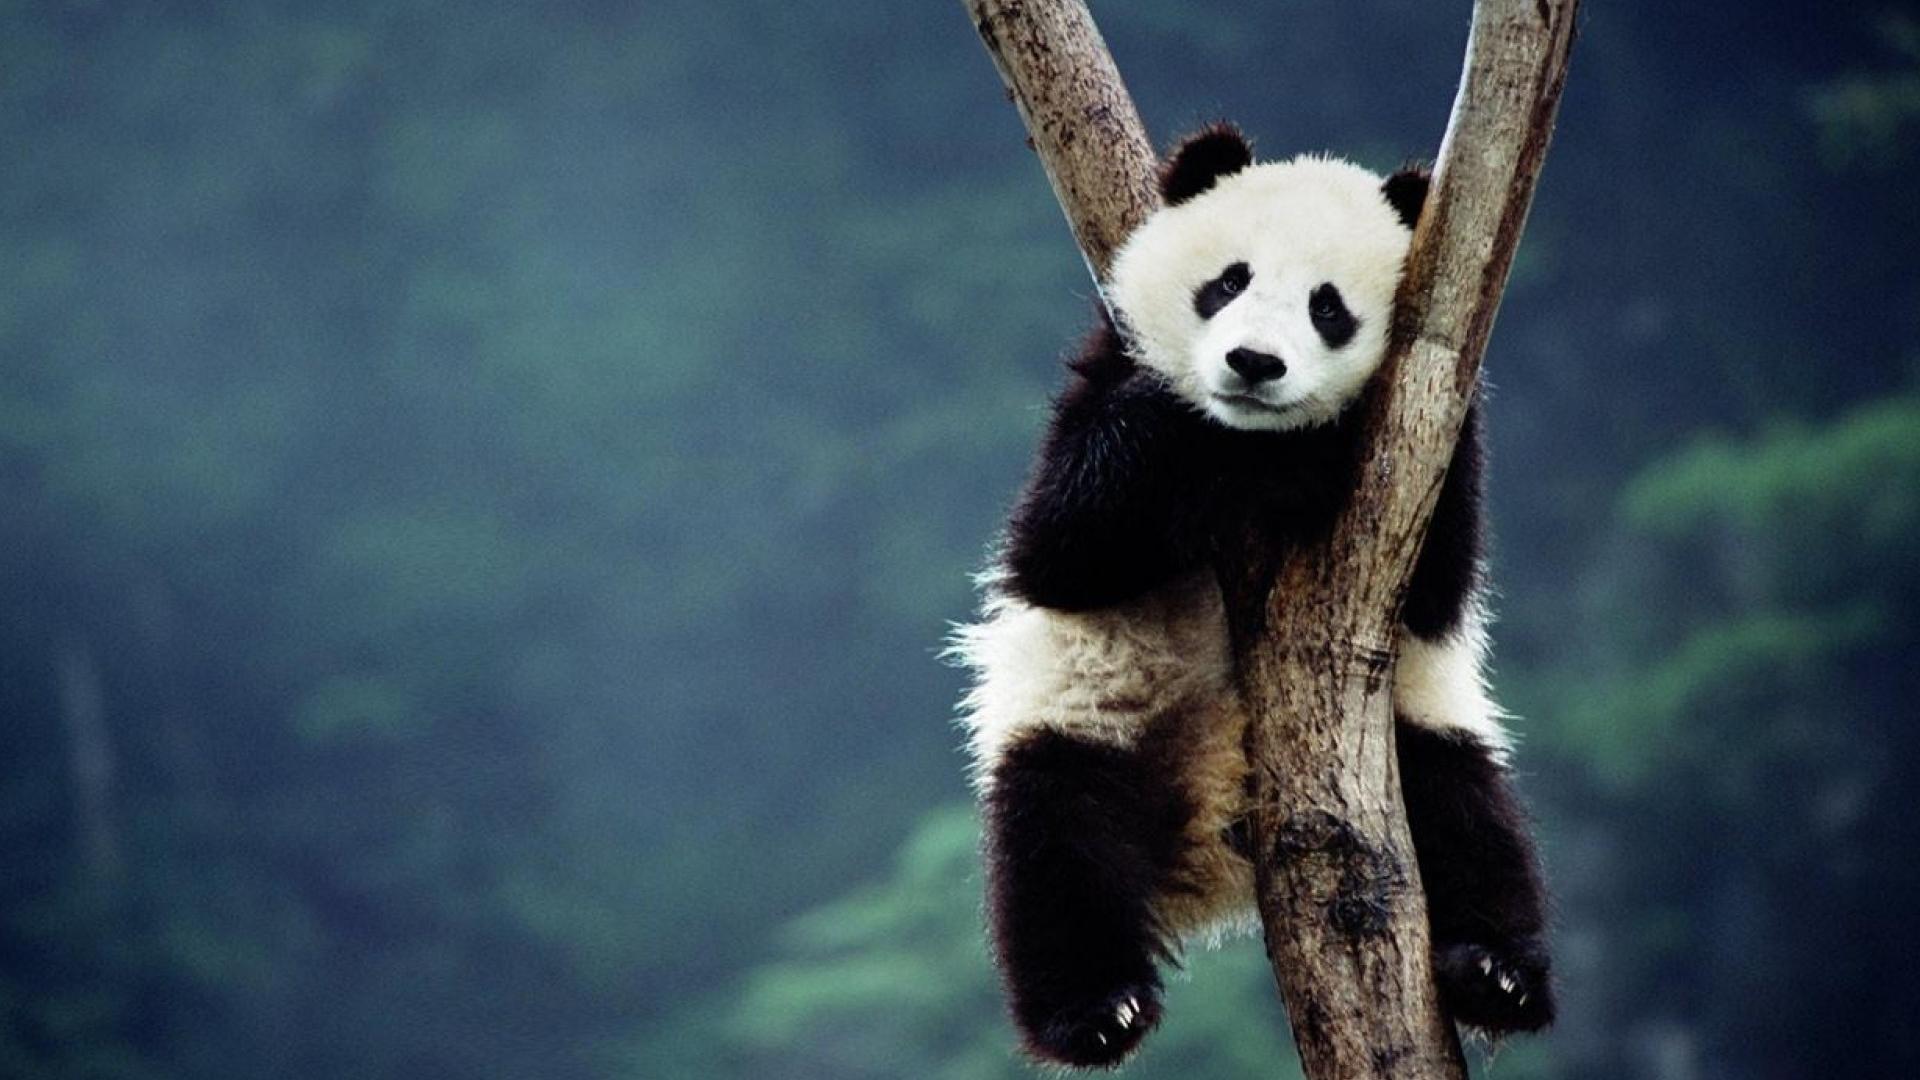 Bing china animals blurred background panda bears wallpaper 79765